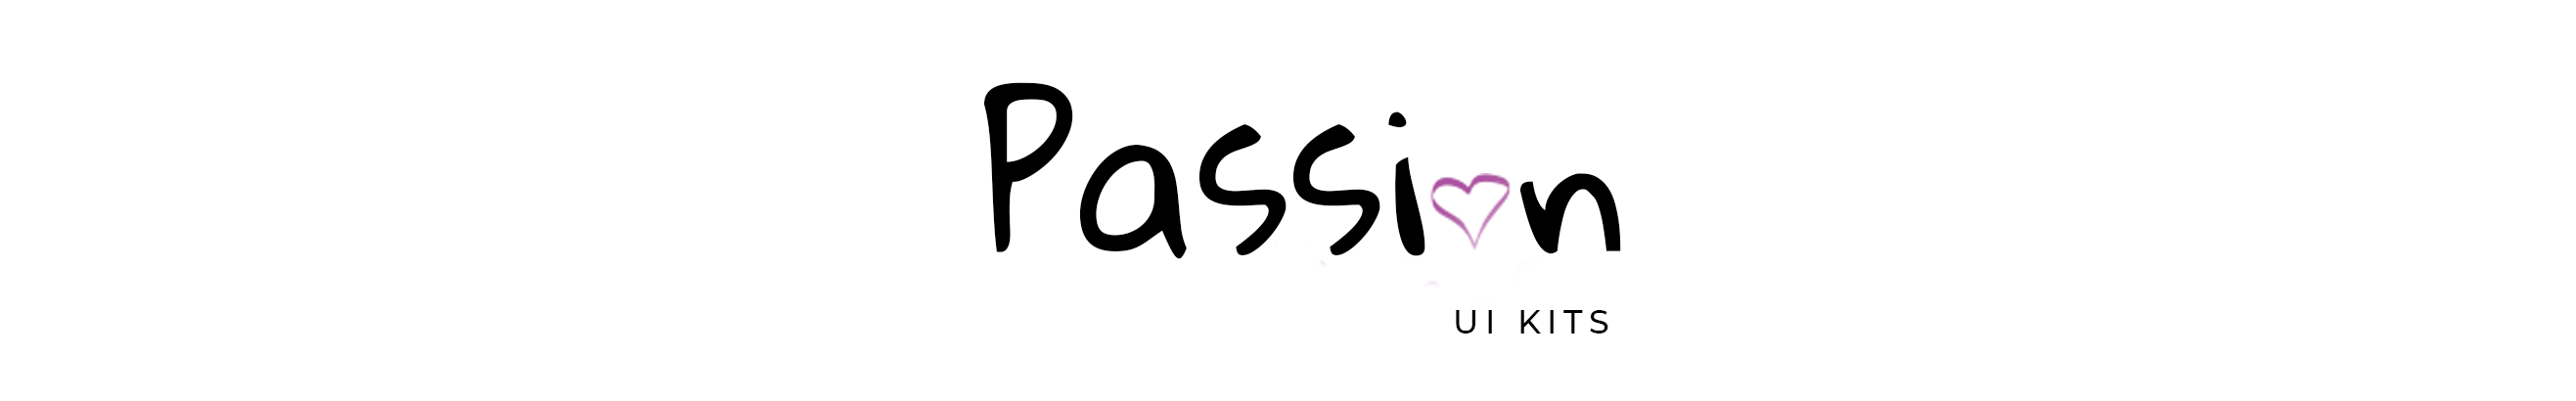 Баннер профиля Passion UIKits